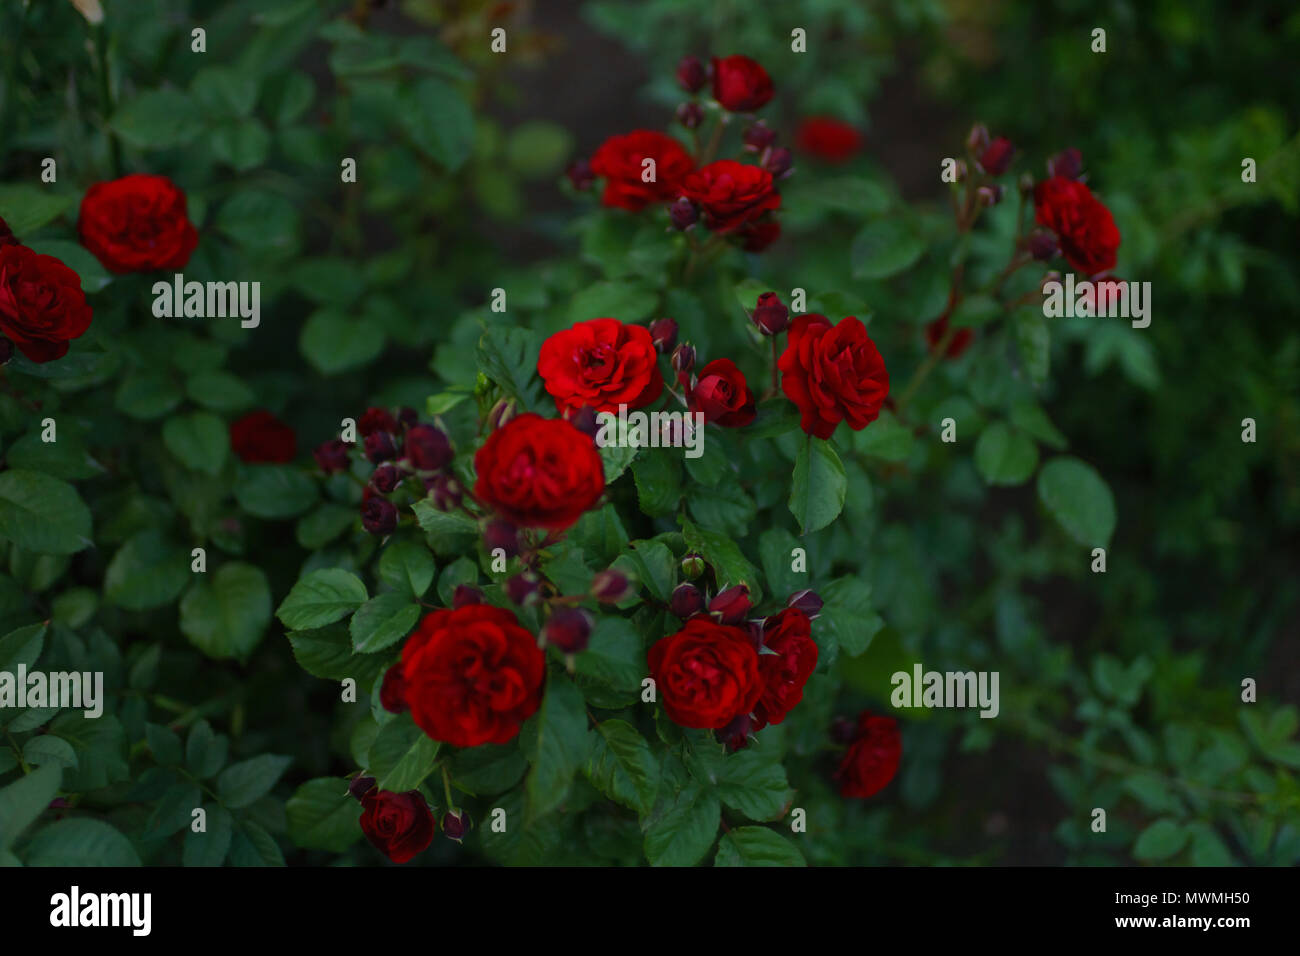 Cespuglio di rose rosse Foto stock - Alamy